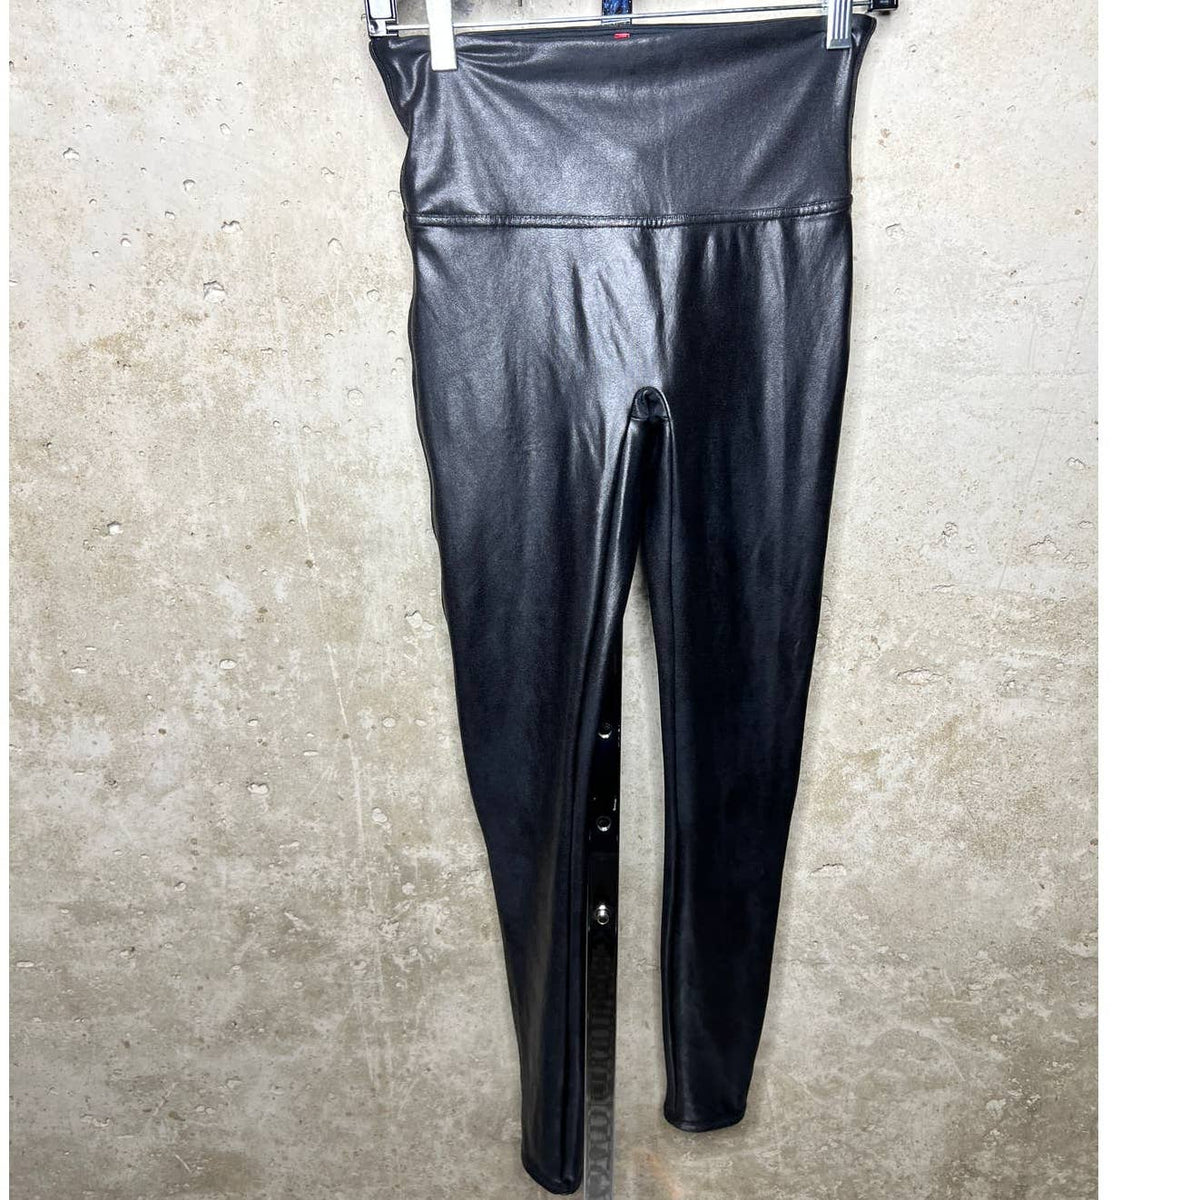 Spanx Faux Leather Black Leggings Sz.Medium